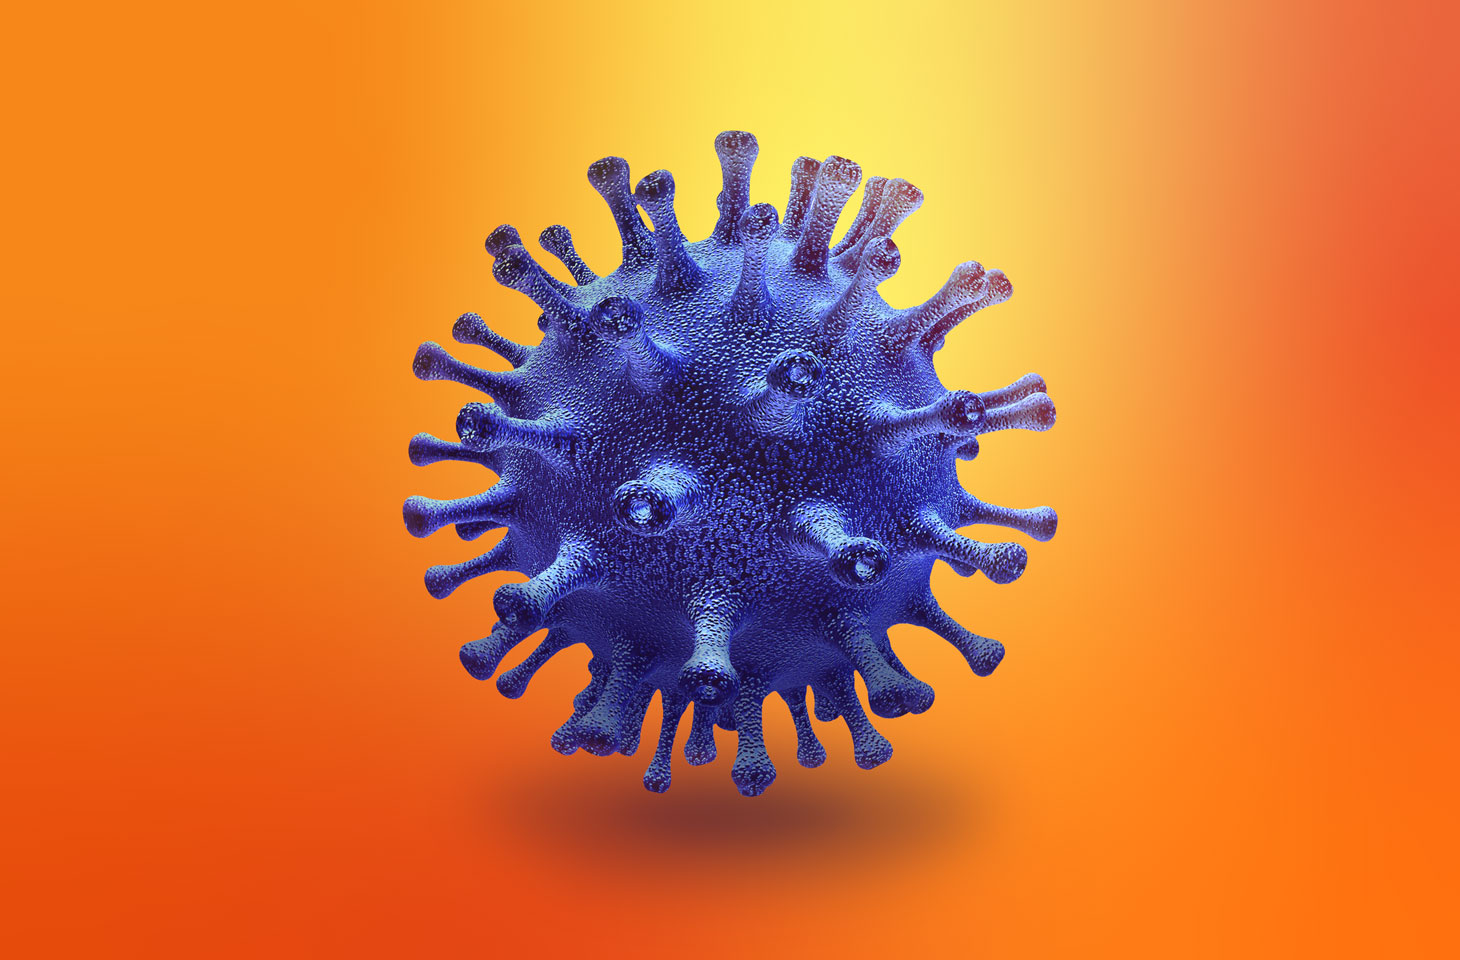 Mutace koronaviru (ilustrační foto)